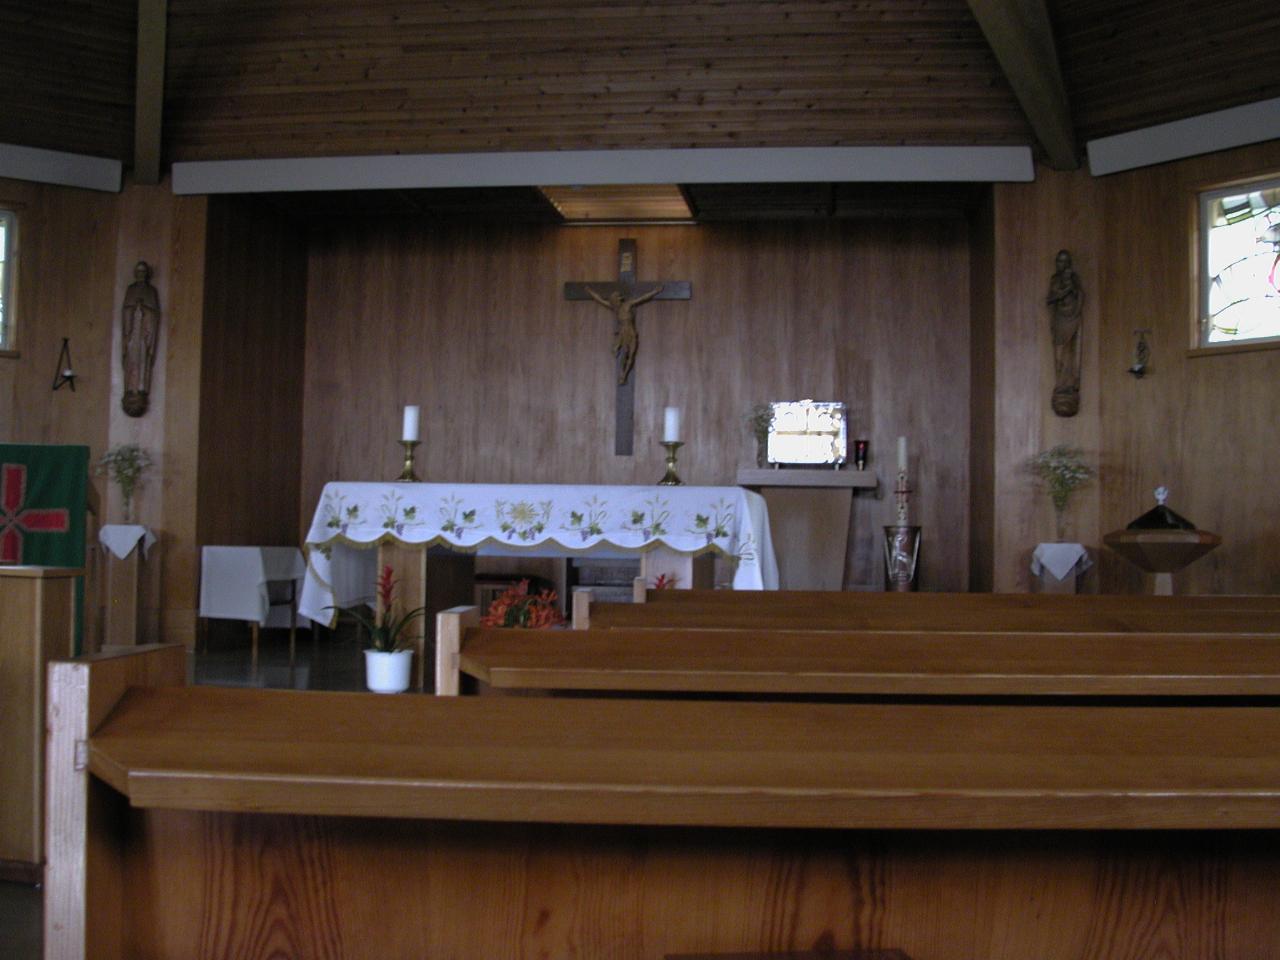 KPLU Viking Jazz: Molde's Catholic Church altar